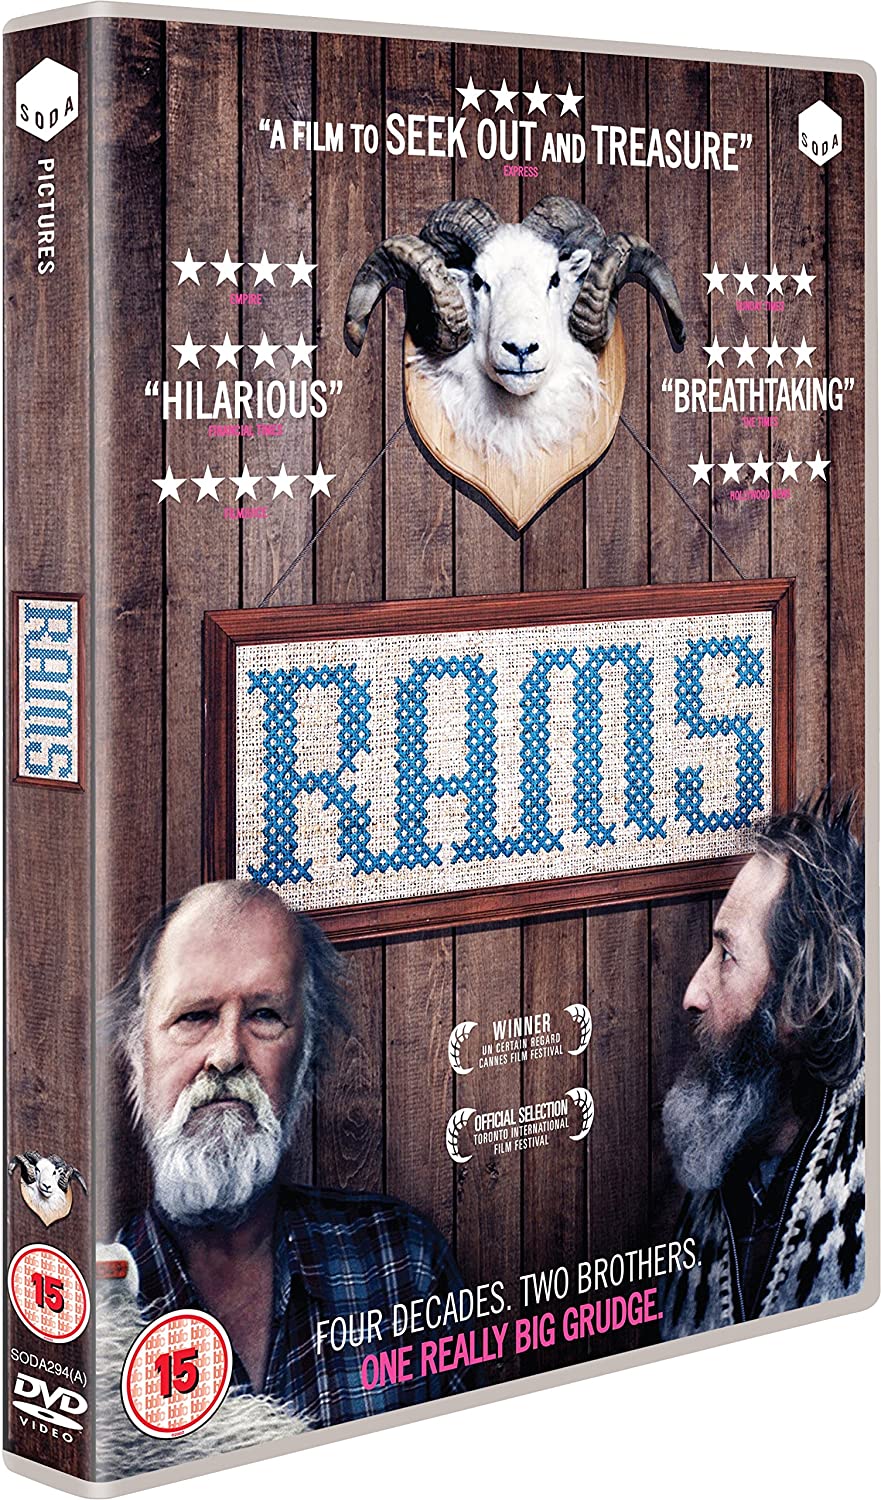 Rams [2016] - Drama [DVD]